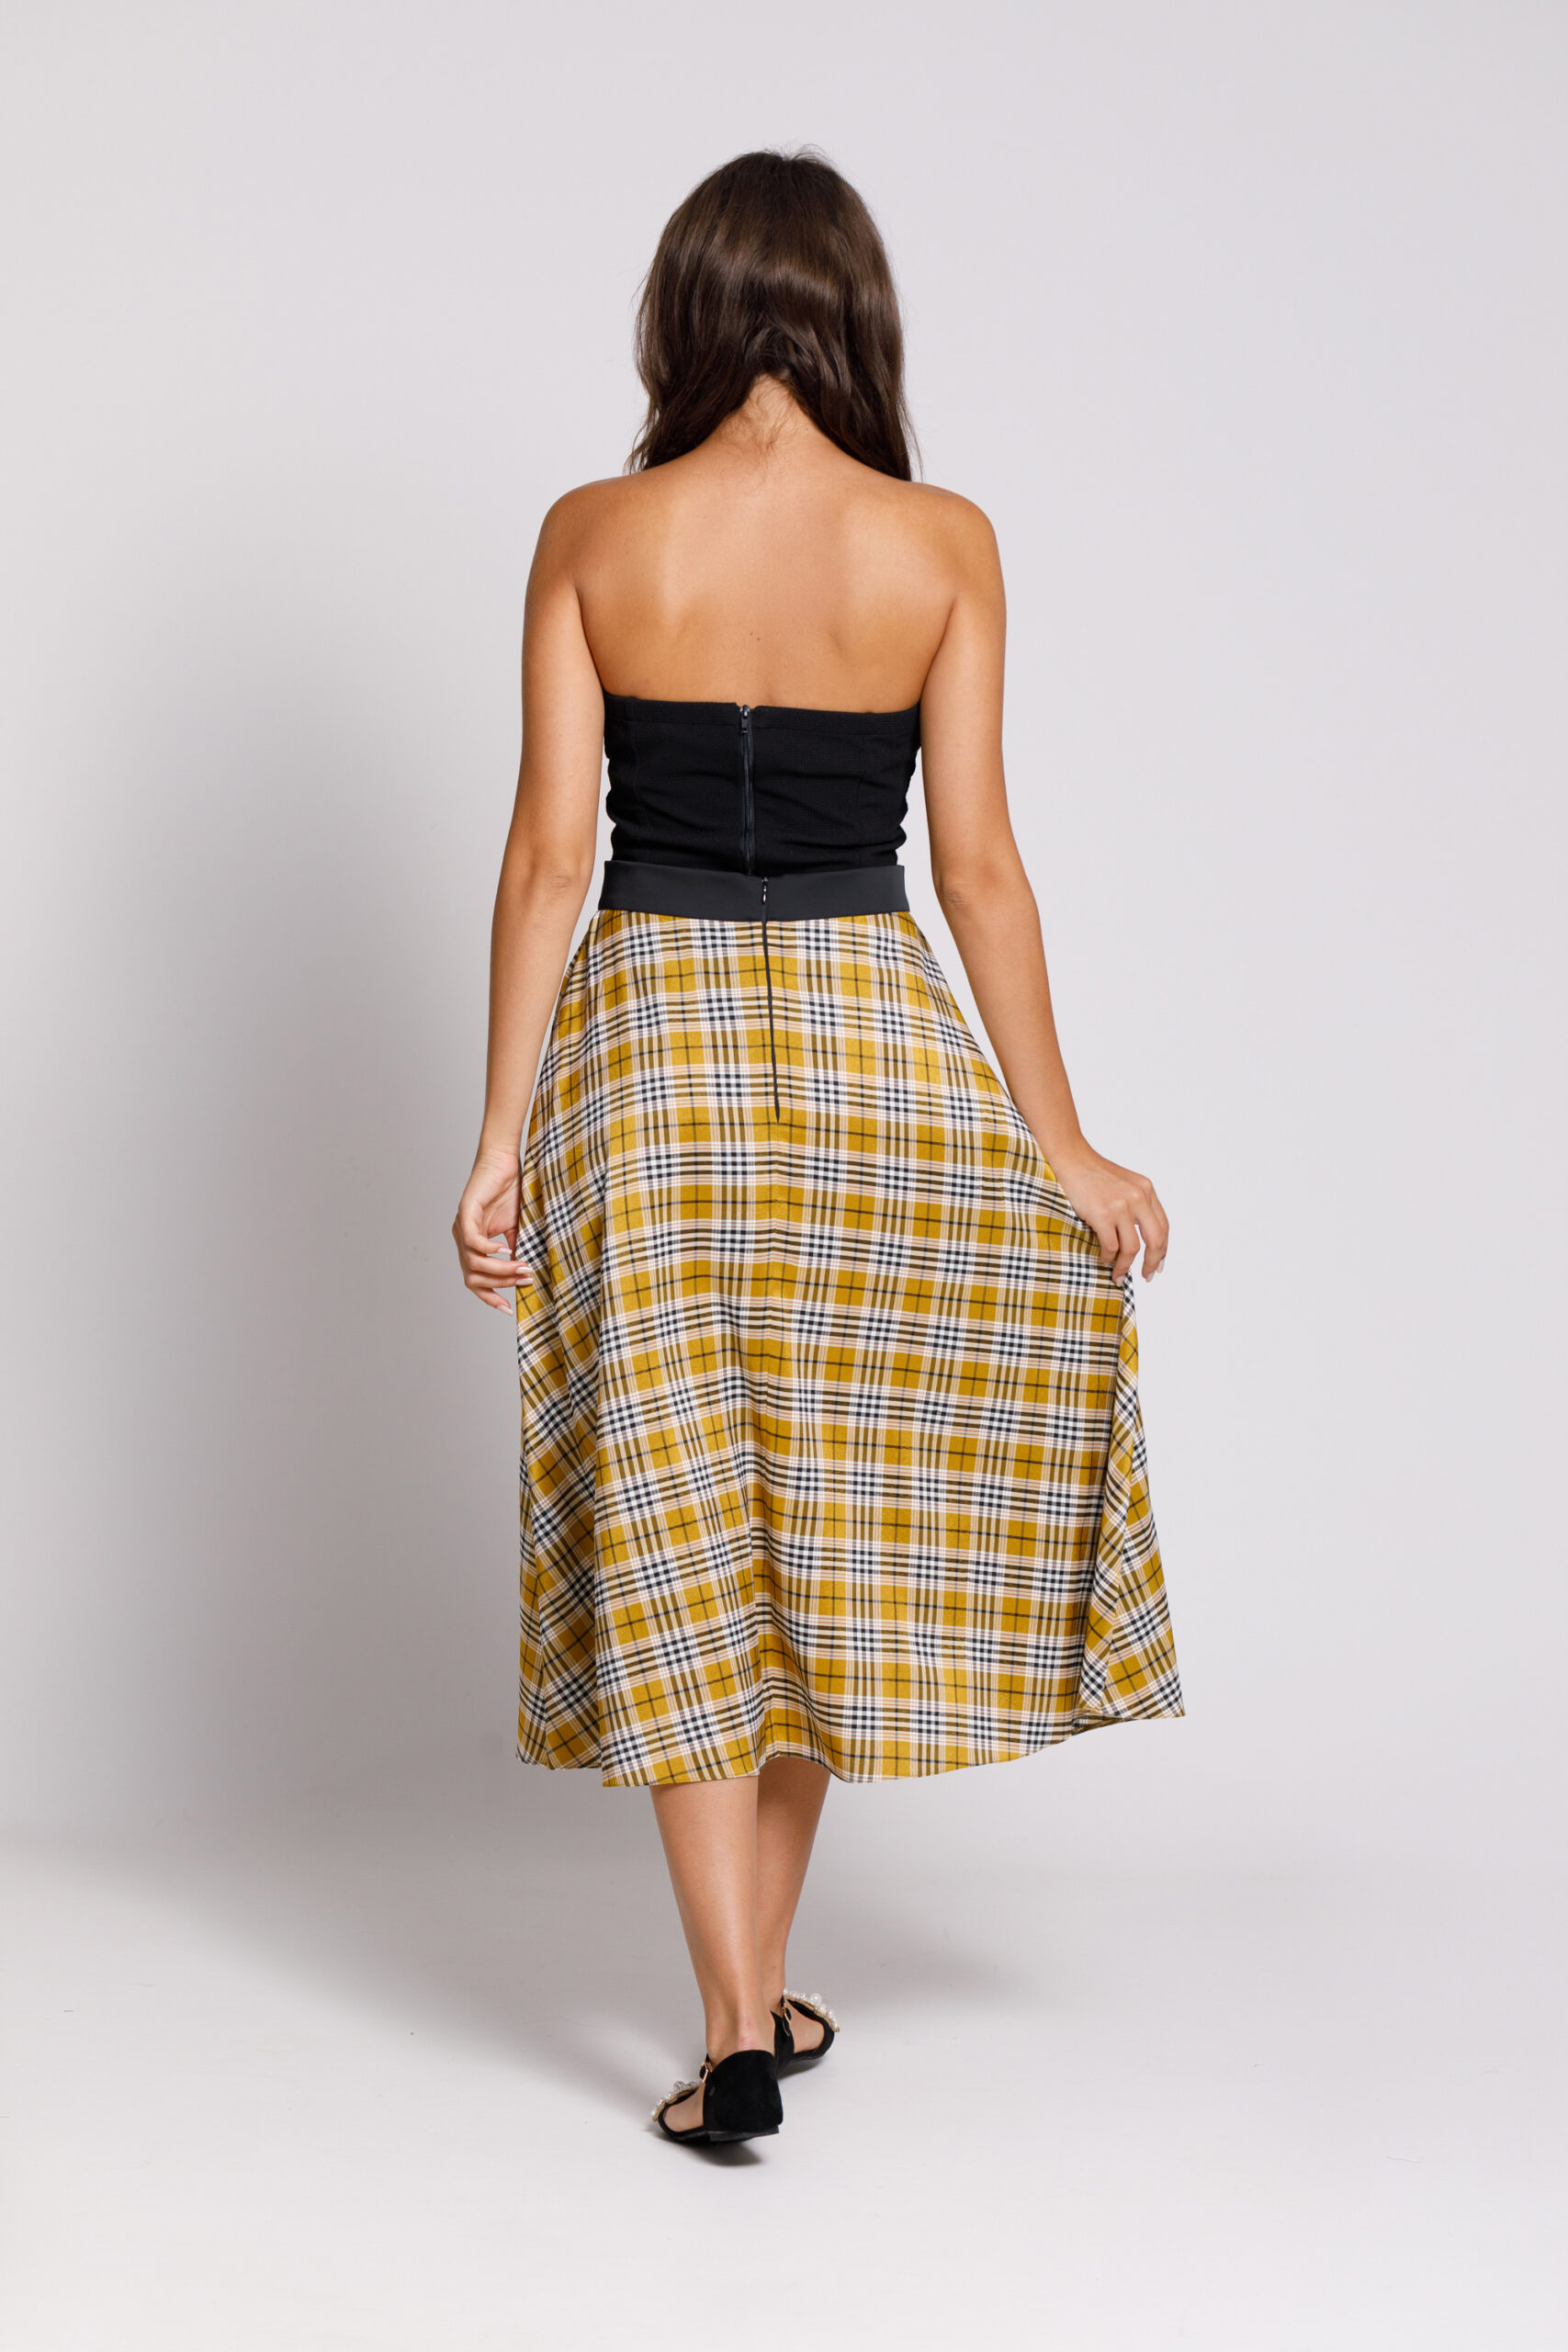 ABENA casual viscose skirt with yellow checks. Natural fabrics, original design, handmade embroidery